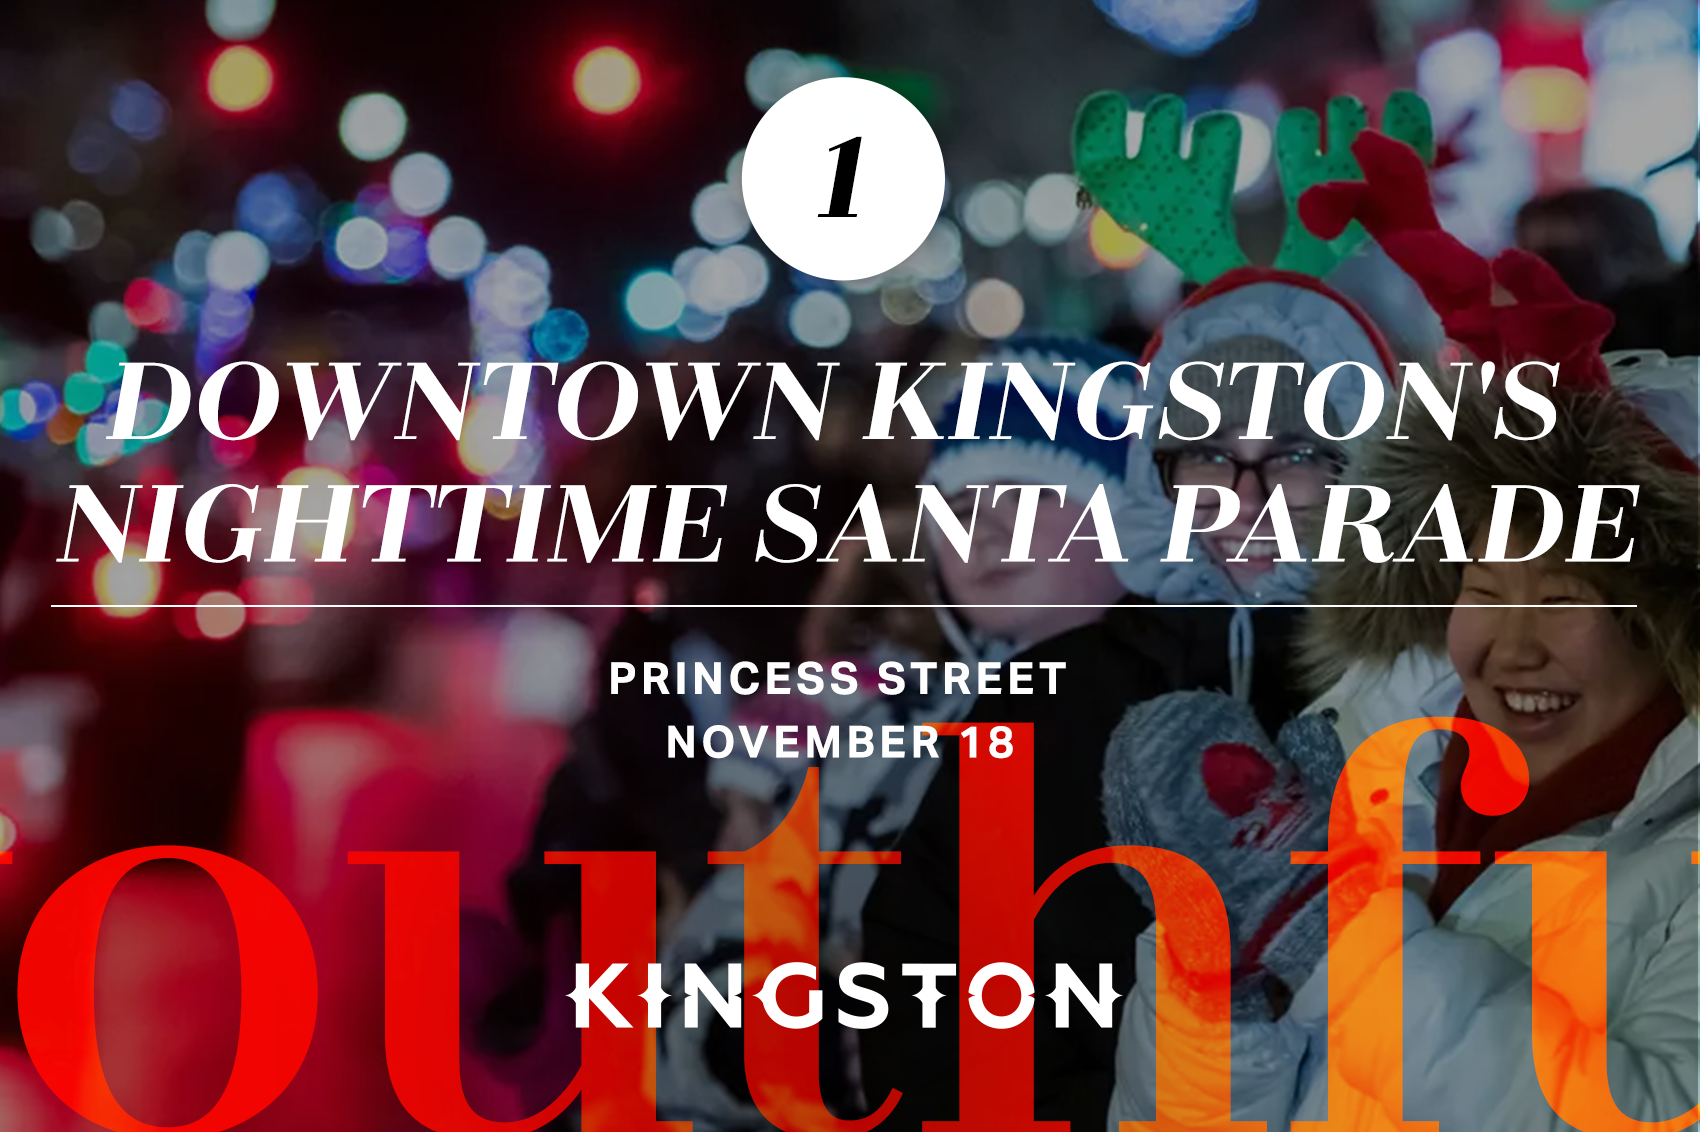 Downtown Kingston’s Nighttime Santa Parade